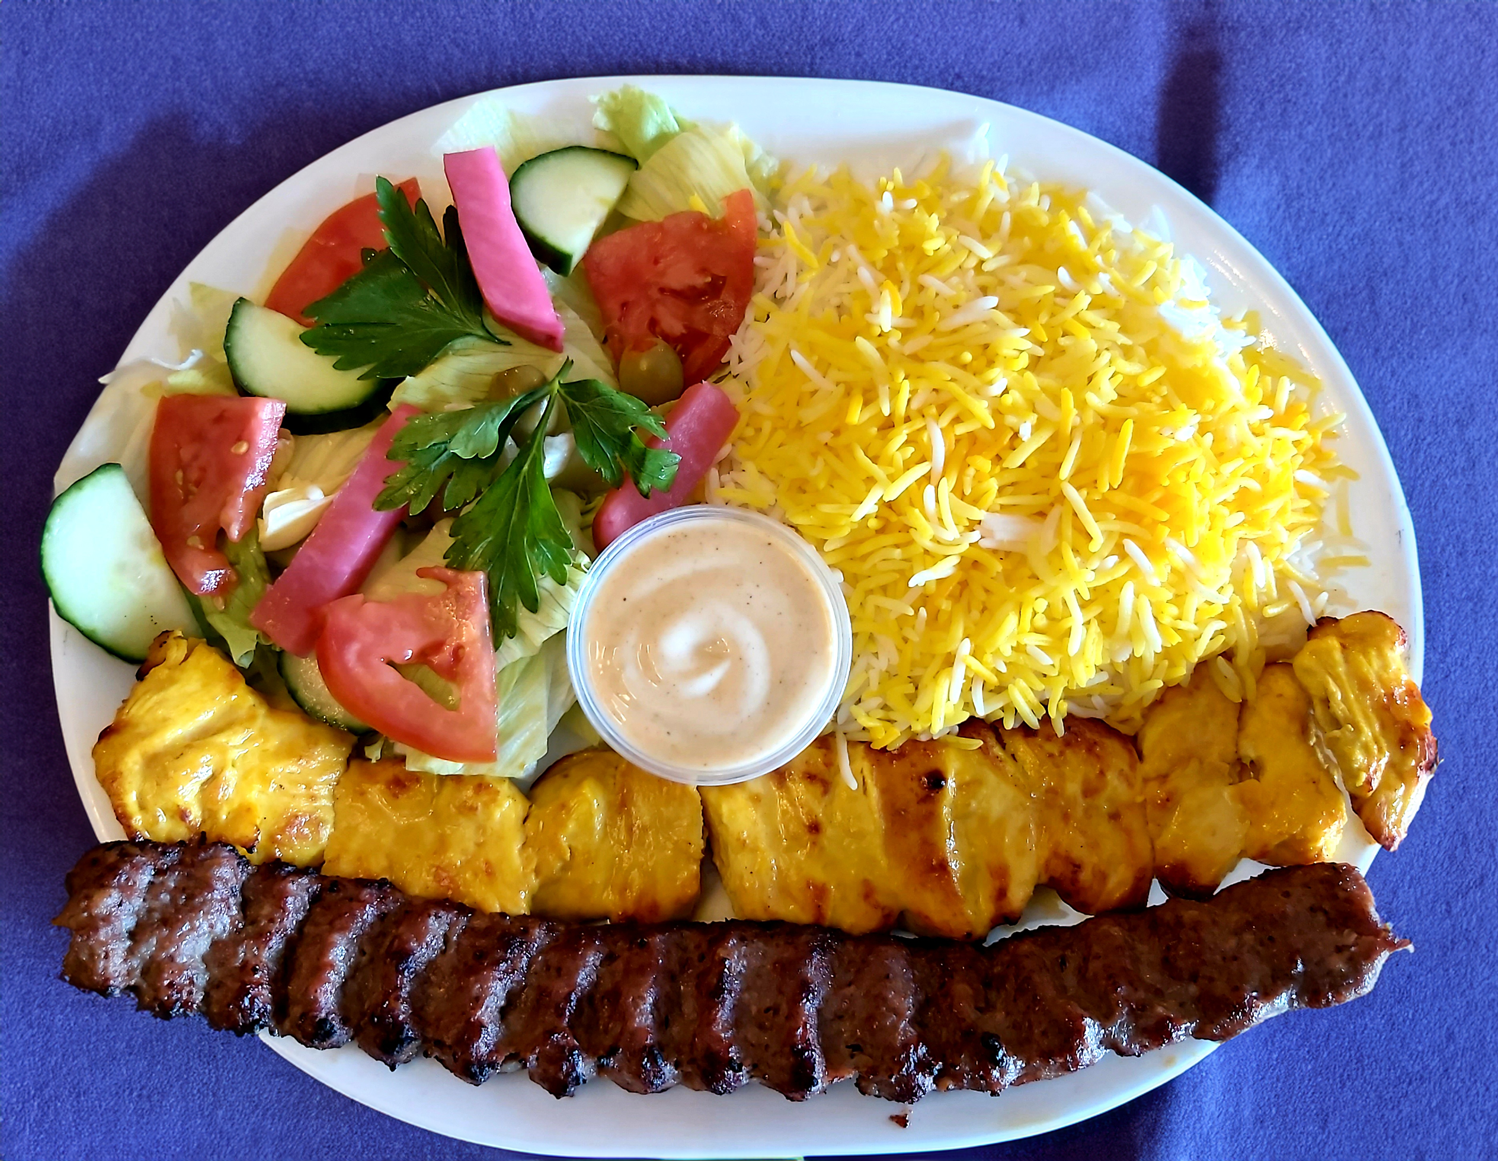 koobideh and chicken kebab with rice and salad